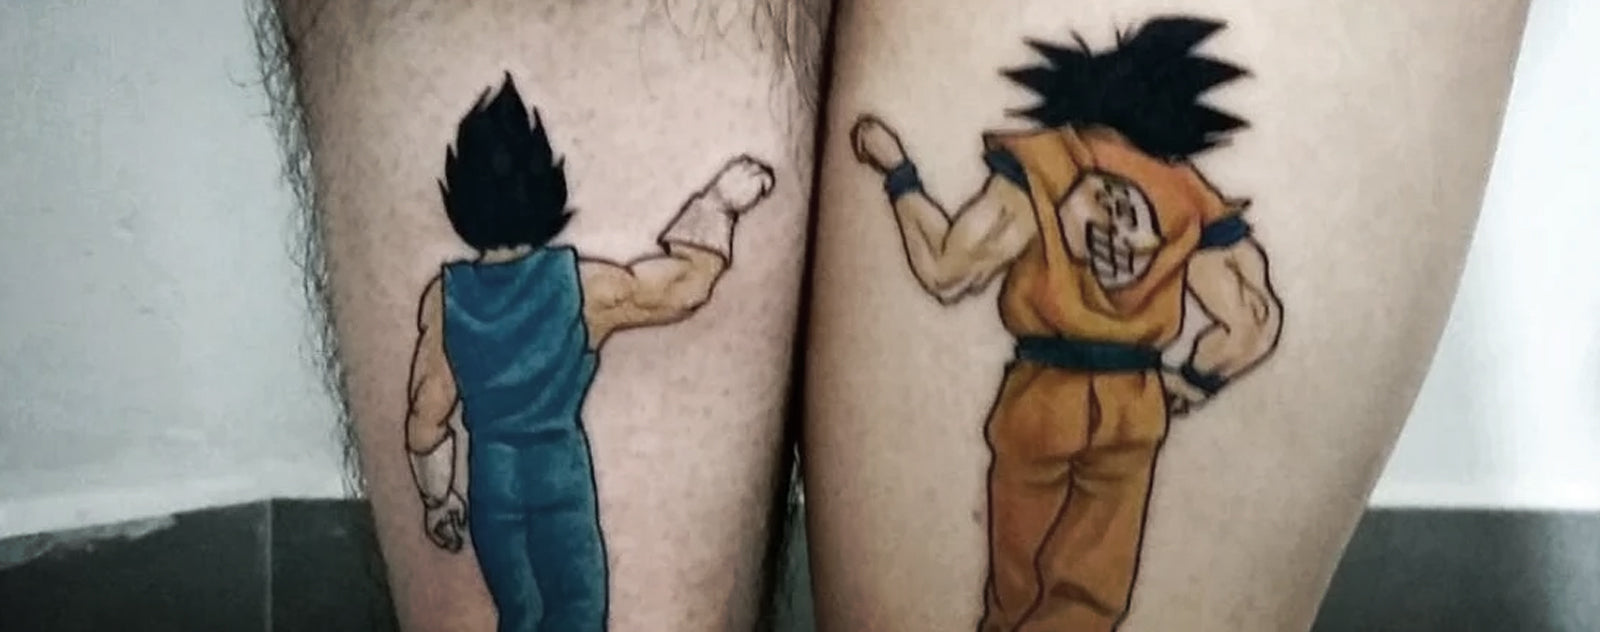 Tatuaje de Vegeta y Goku